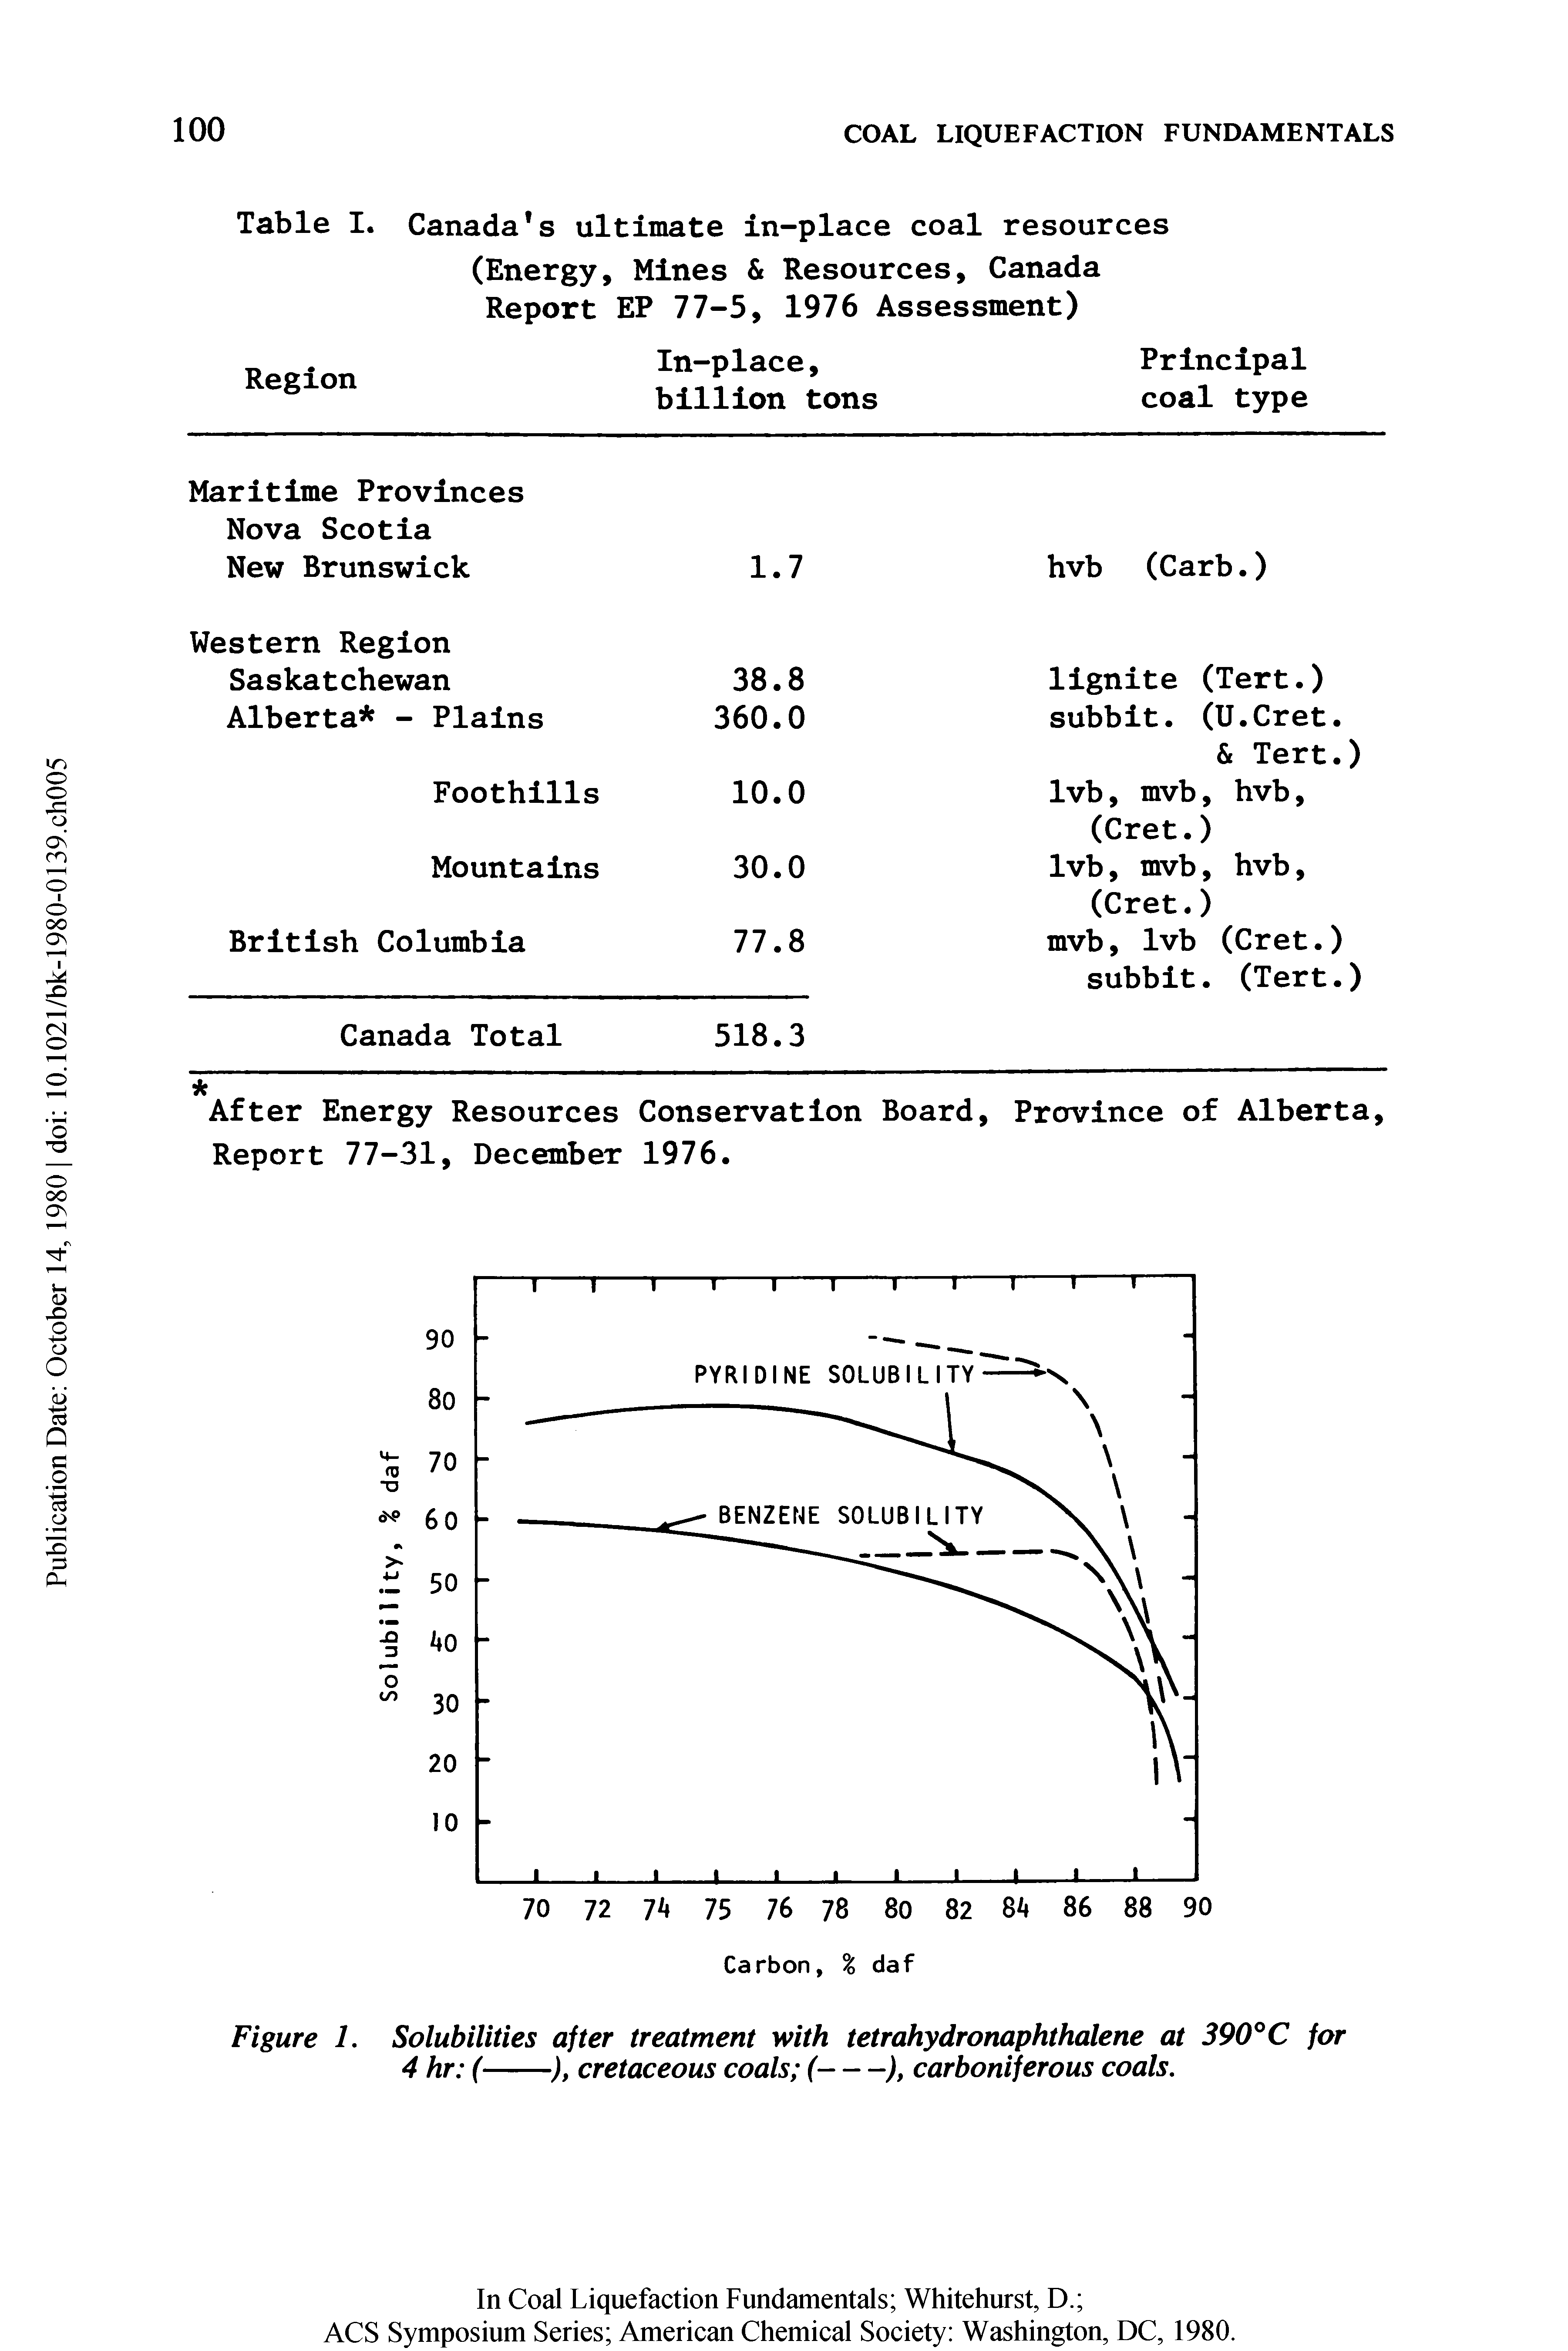 Figure 1. Solubilities after treatment with tetrahydronaphthalene at 390°C for 4 hr (----------------), cretaceous coals (-), carboniferous coals.